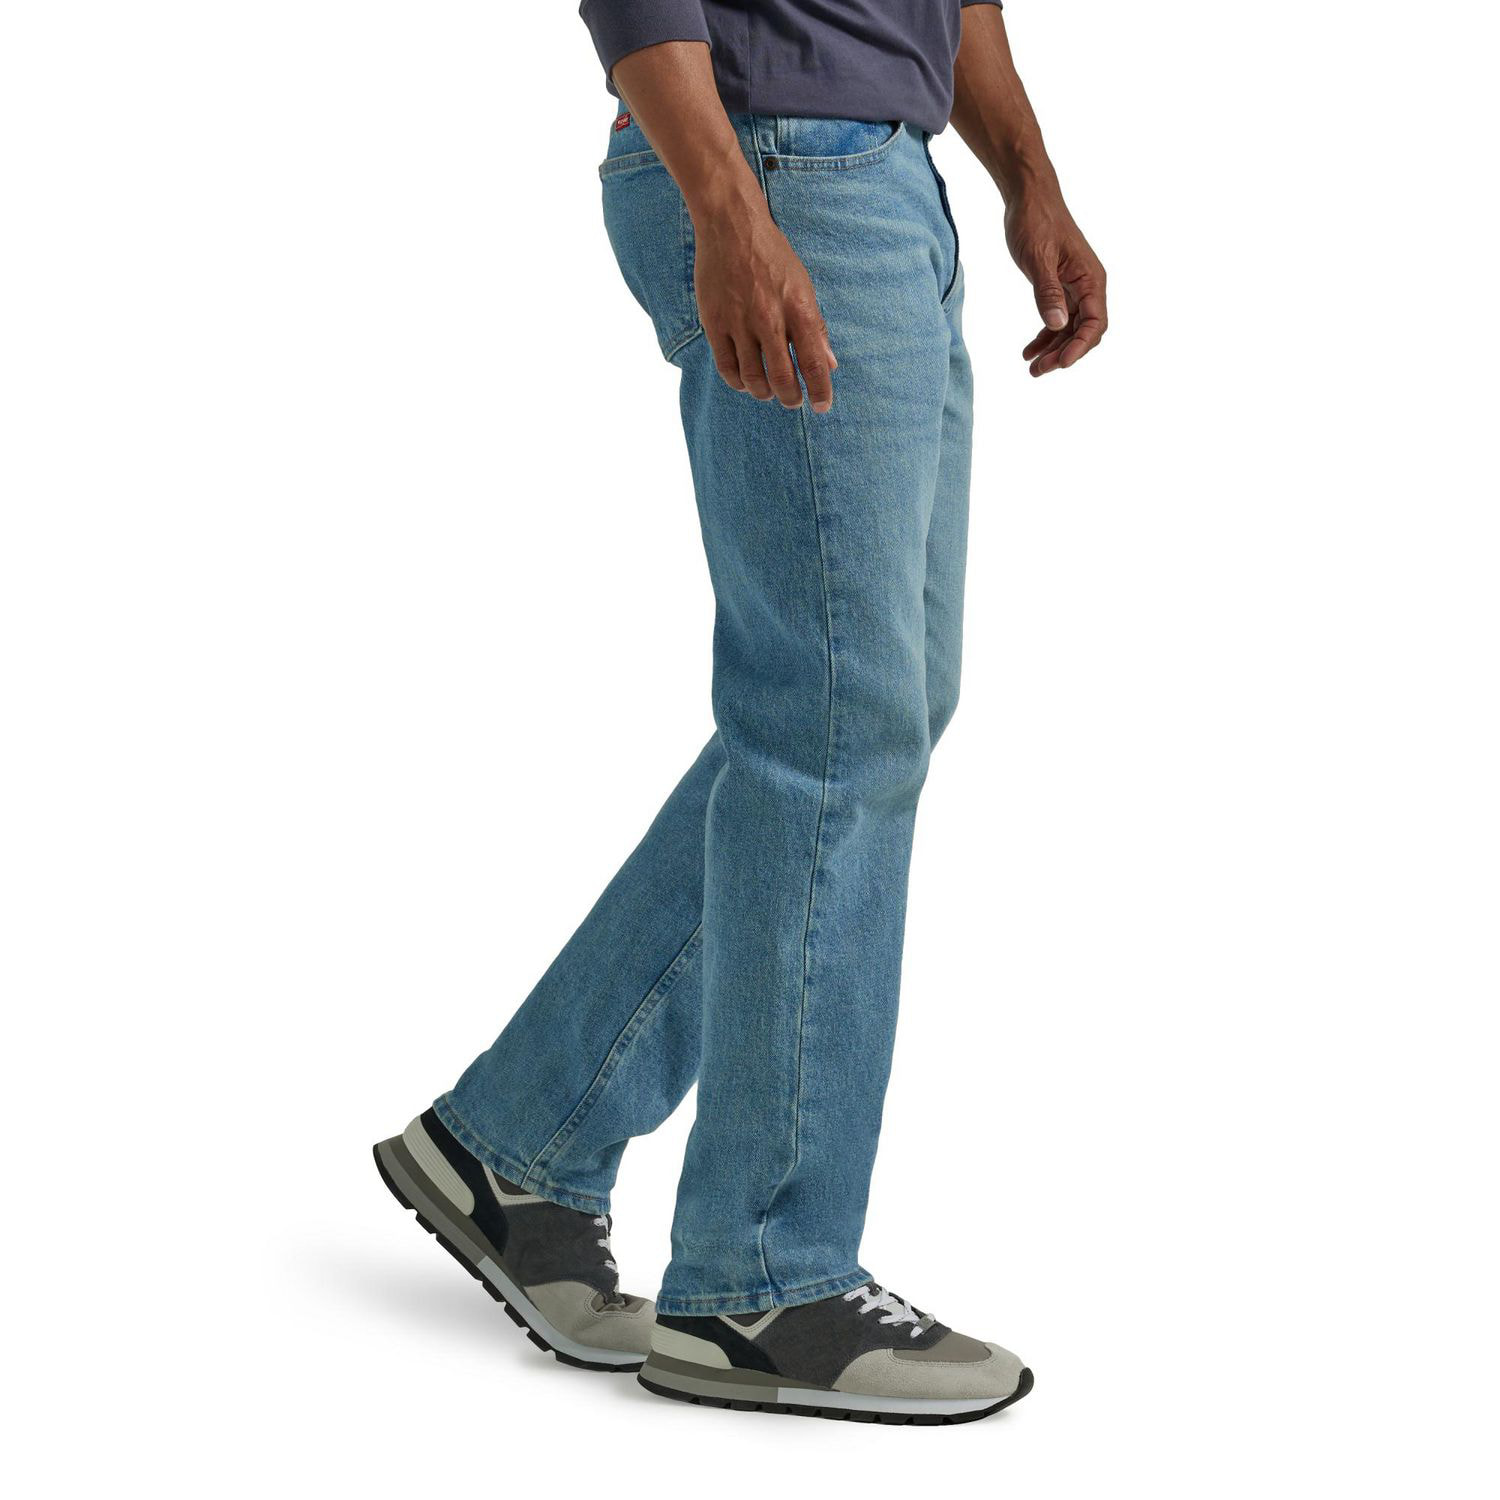 Wrangler Men's Five Star Regular Fit Jeans, Regular Fit 